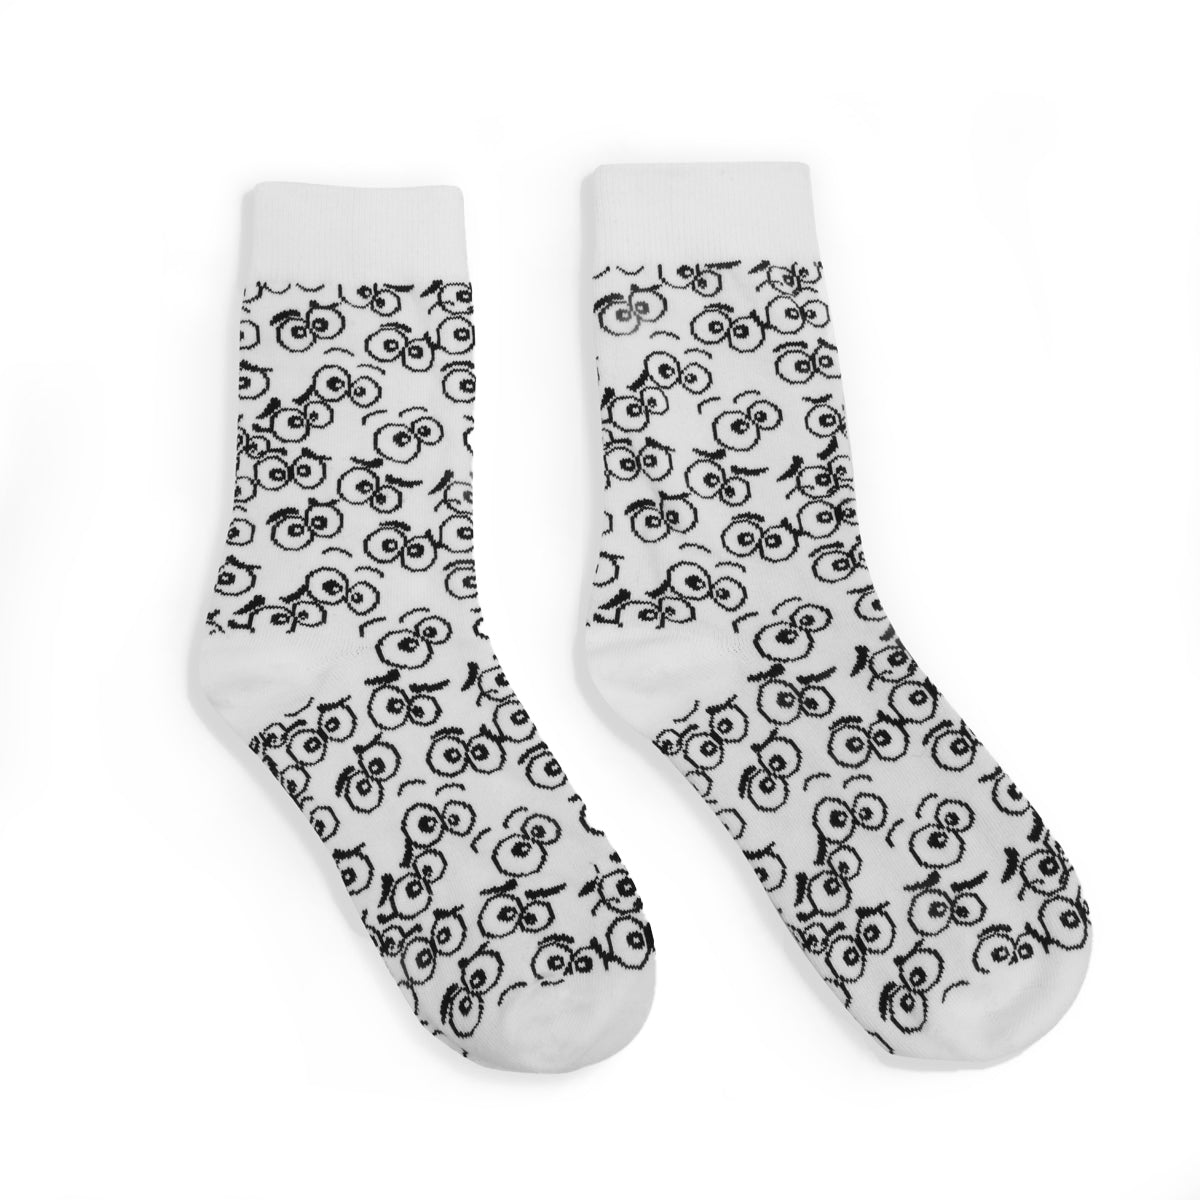 Eyes on Me Socks - Accessories - KOI Footwear - White - Front View